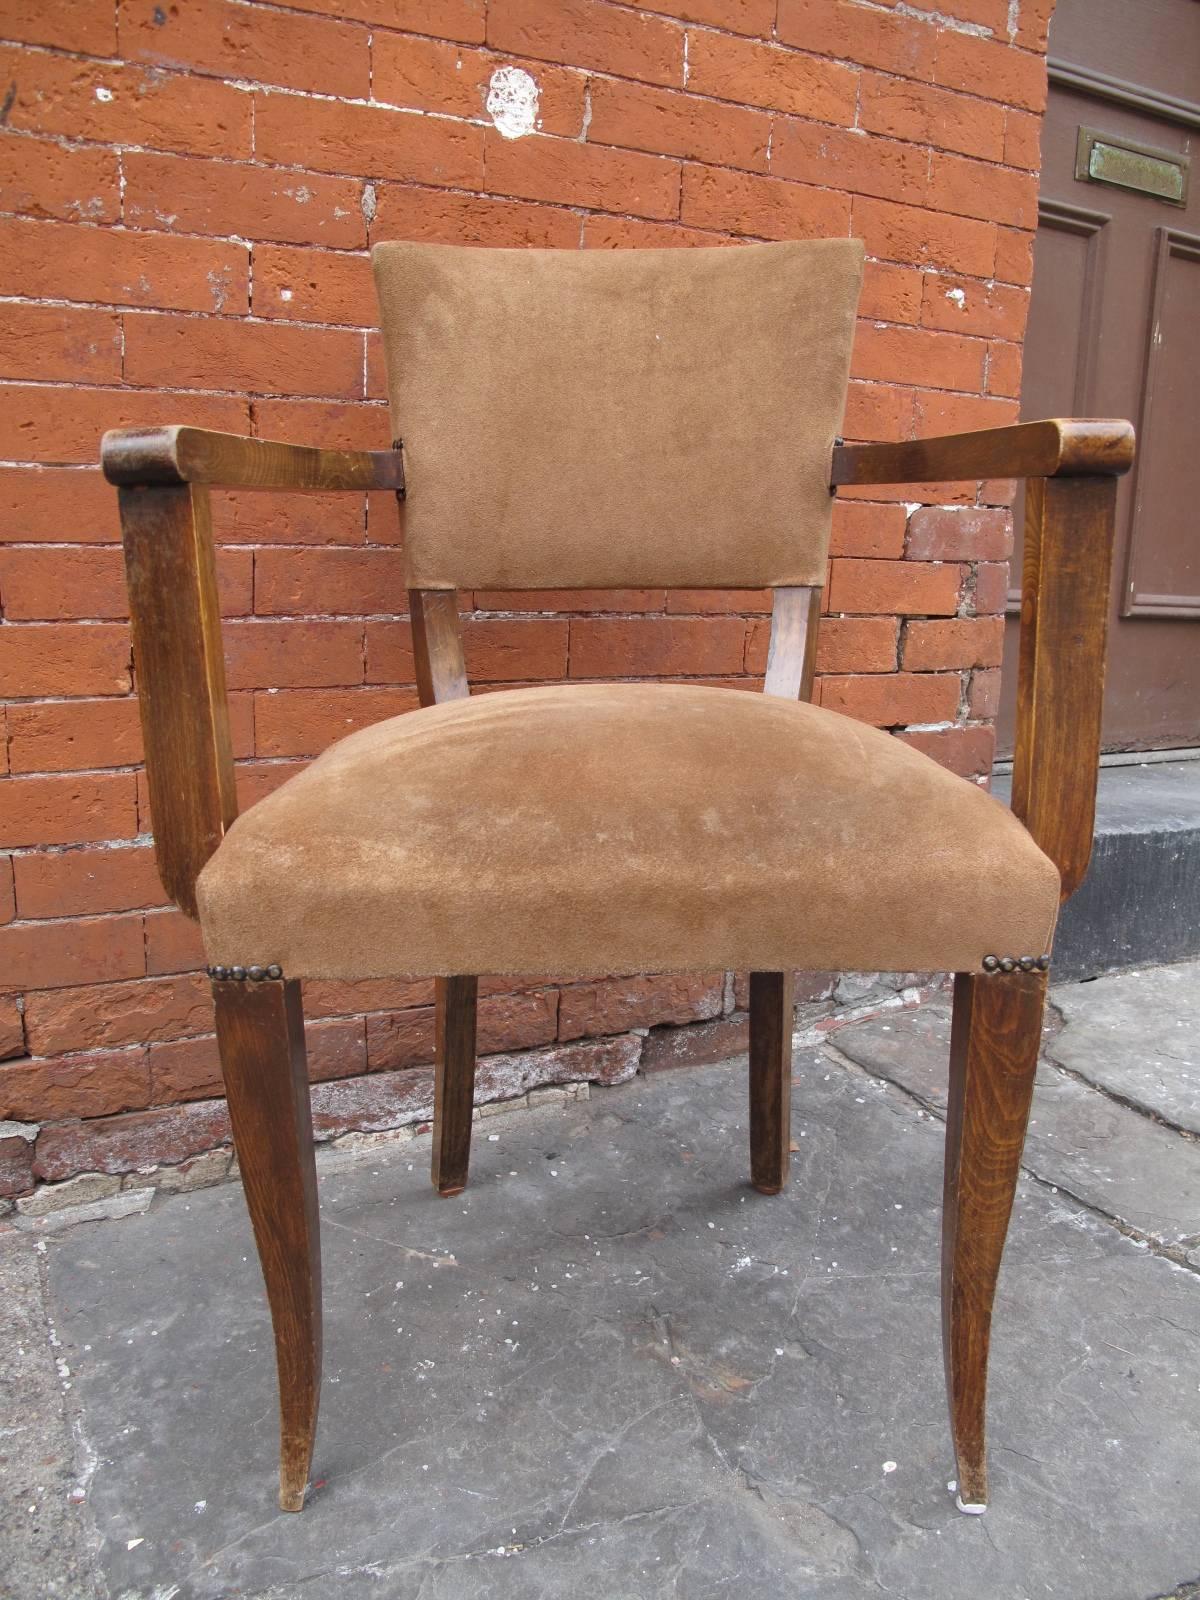 Elegant 1940s American armchair in suede upholstery. Tapered legs. Nailhead details.